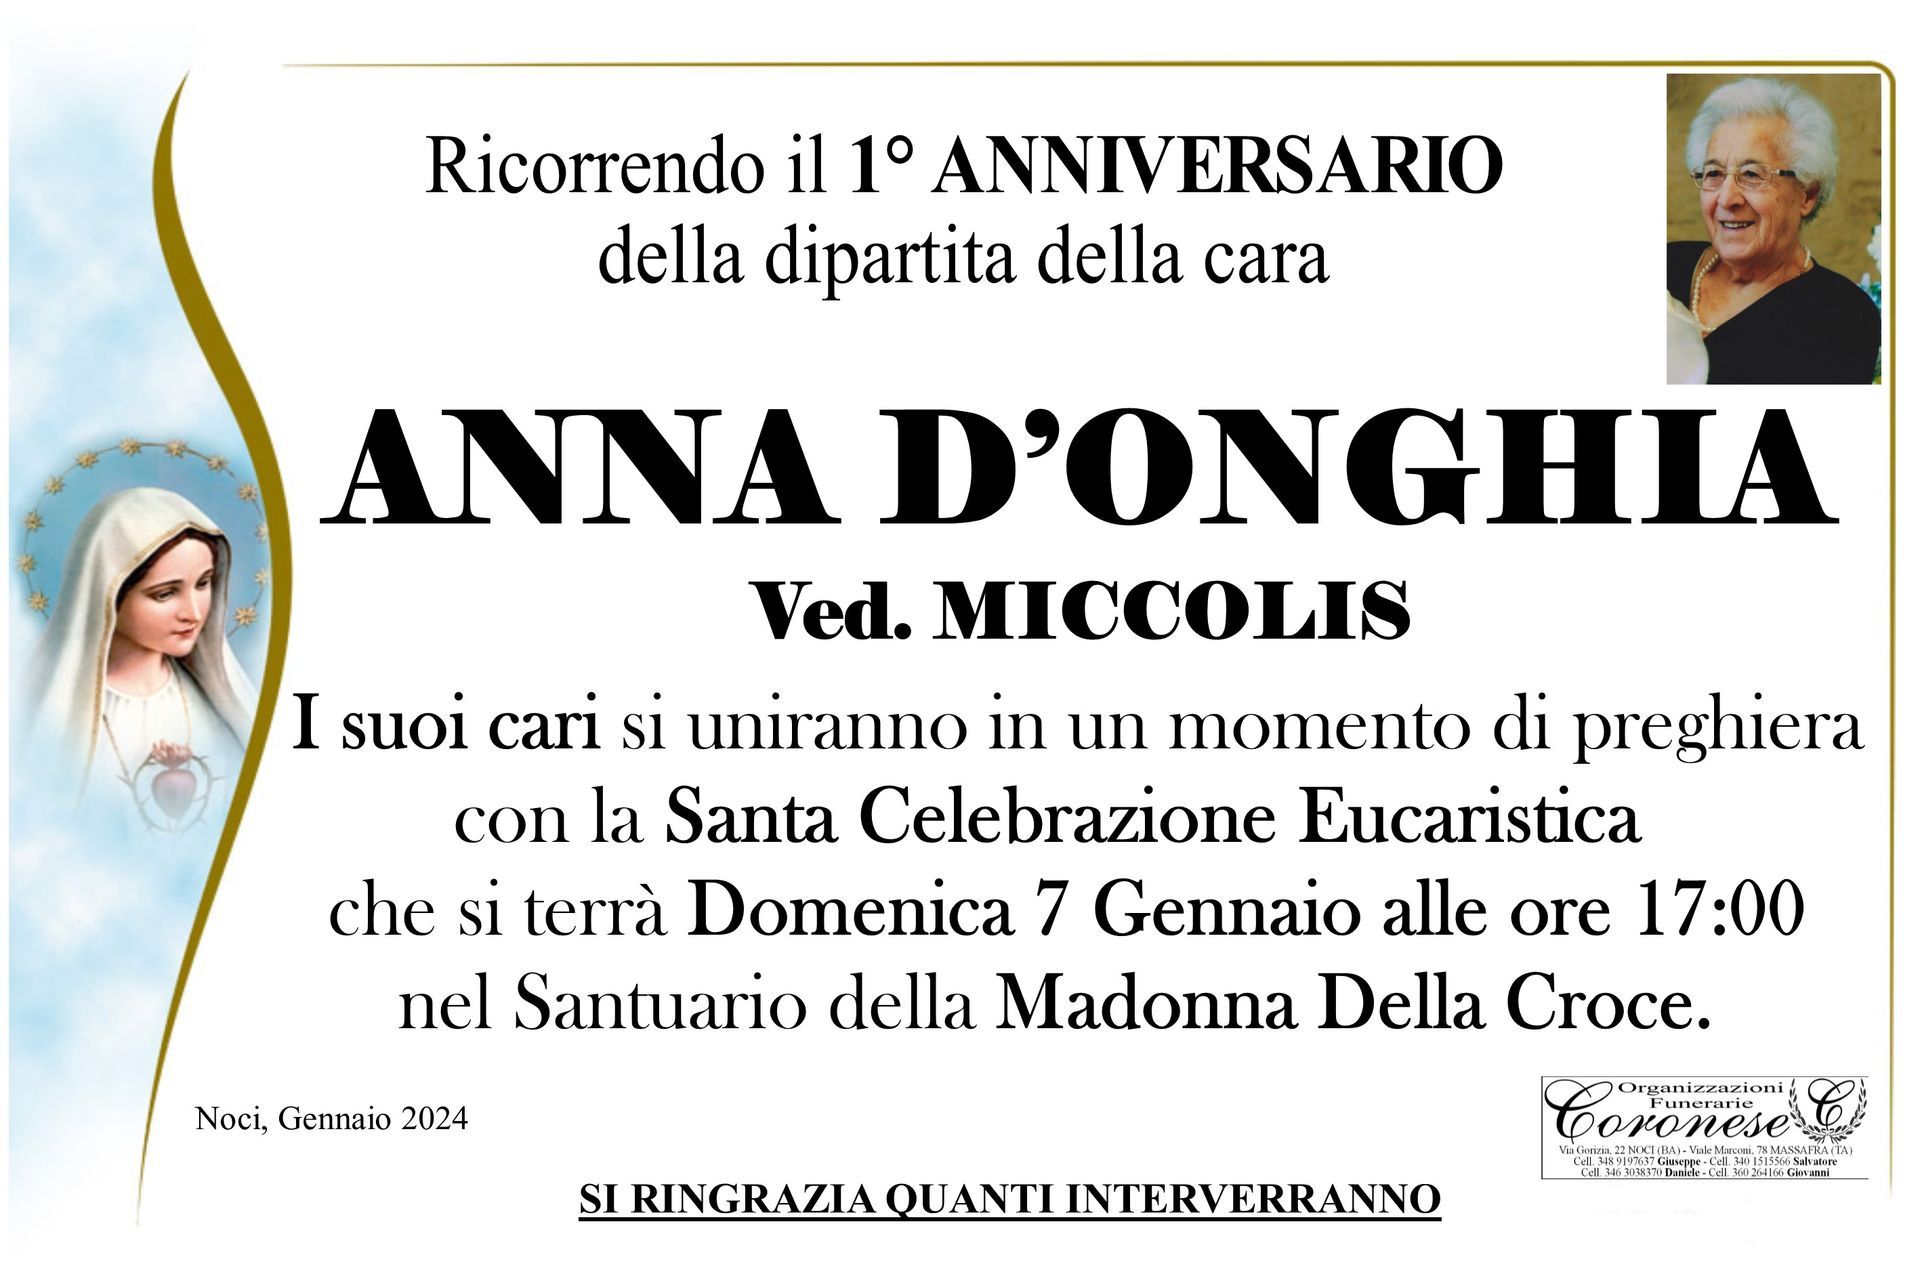 necrologio ANNA D'ONGHIA Ved. Miccolis